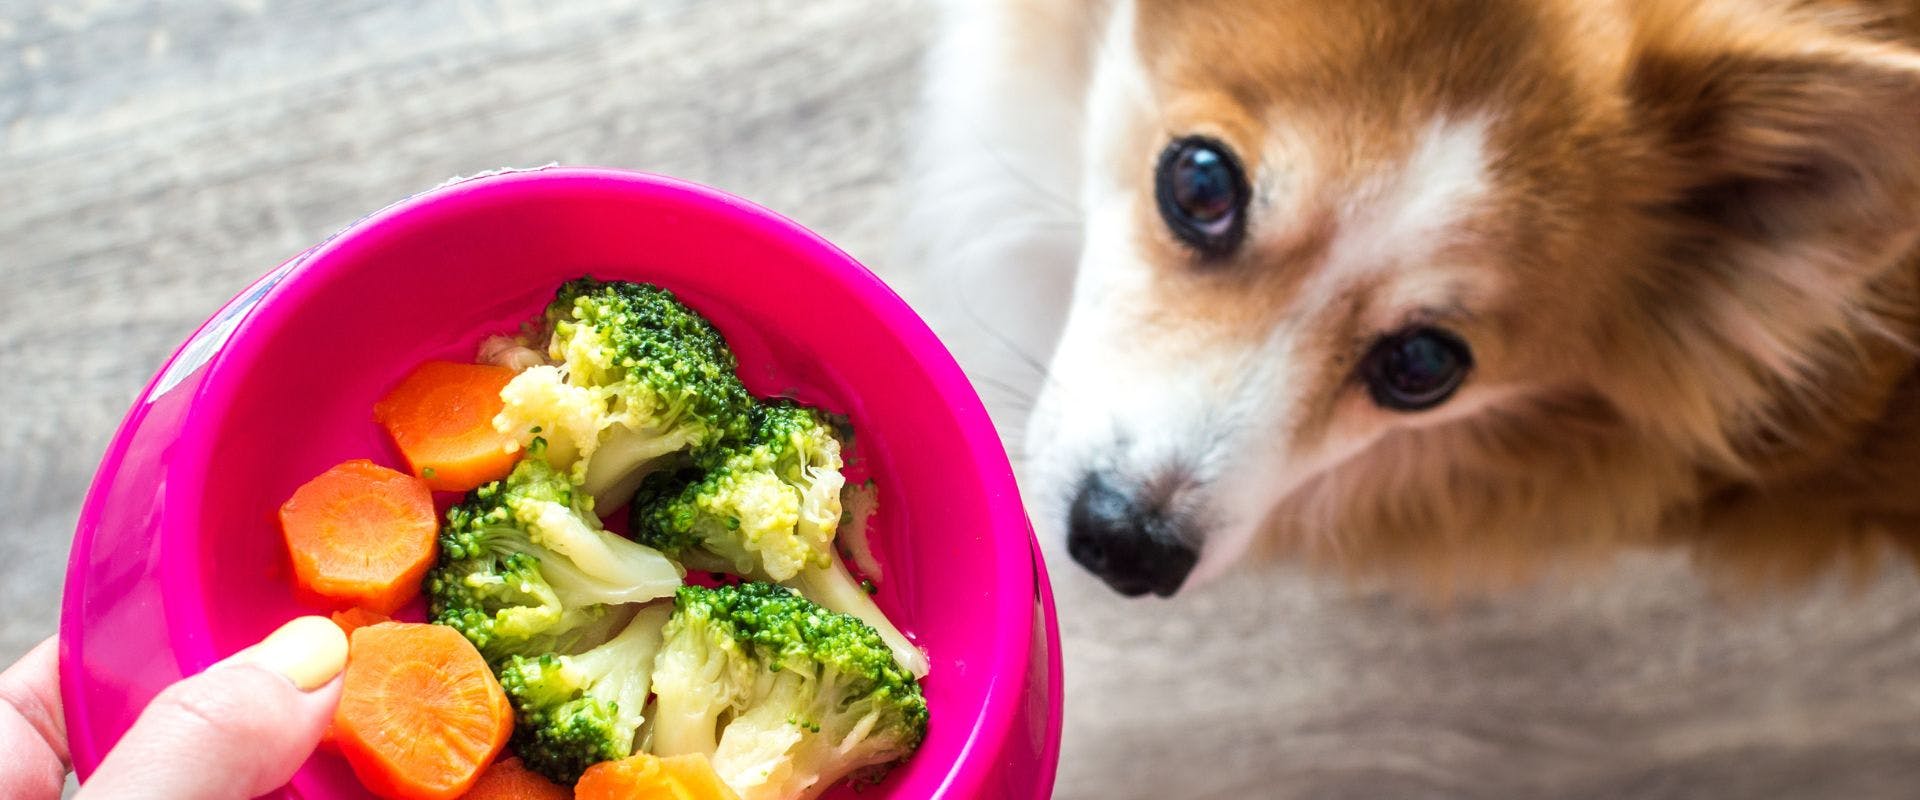 Dog waiting to eat broccoli